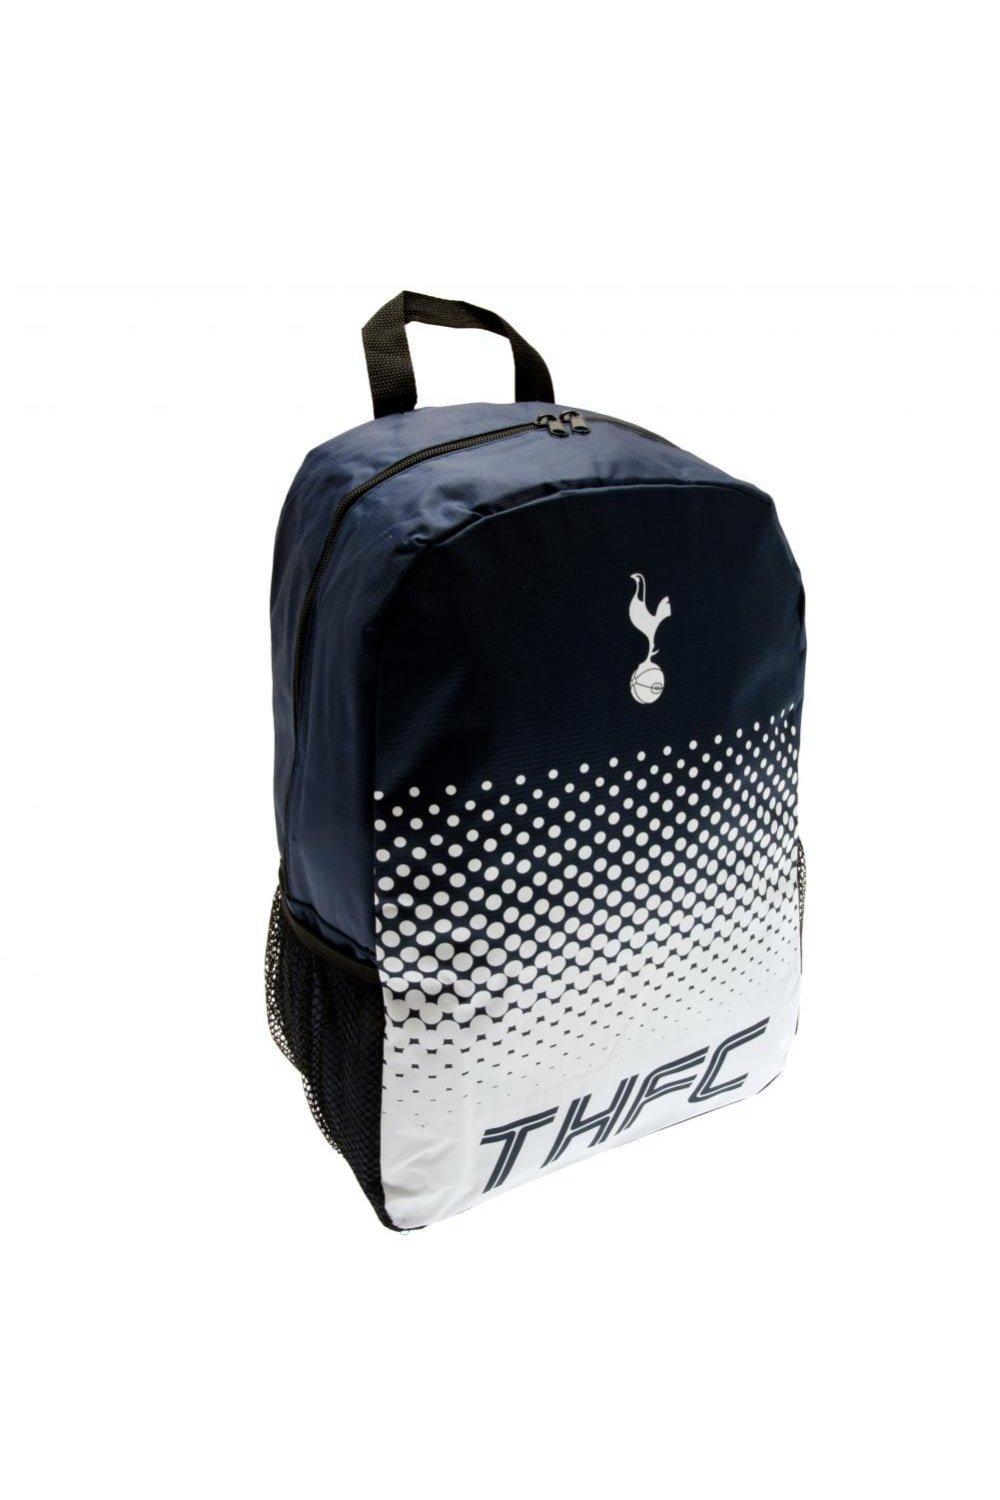 Рюкзак Tottenham Hotspur FC, темно-синий флэш рюкзак tottenham hotspur fc темно синий